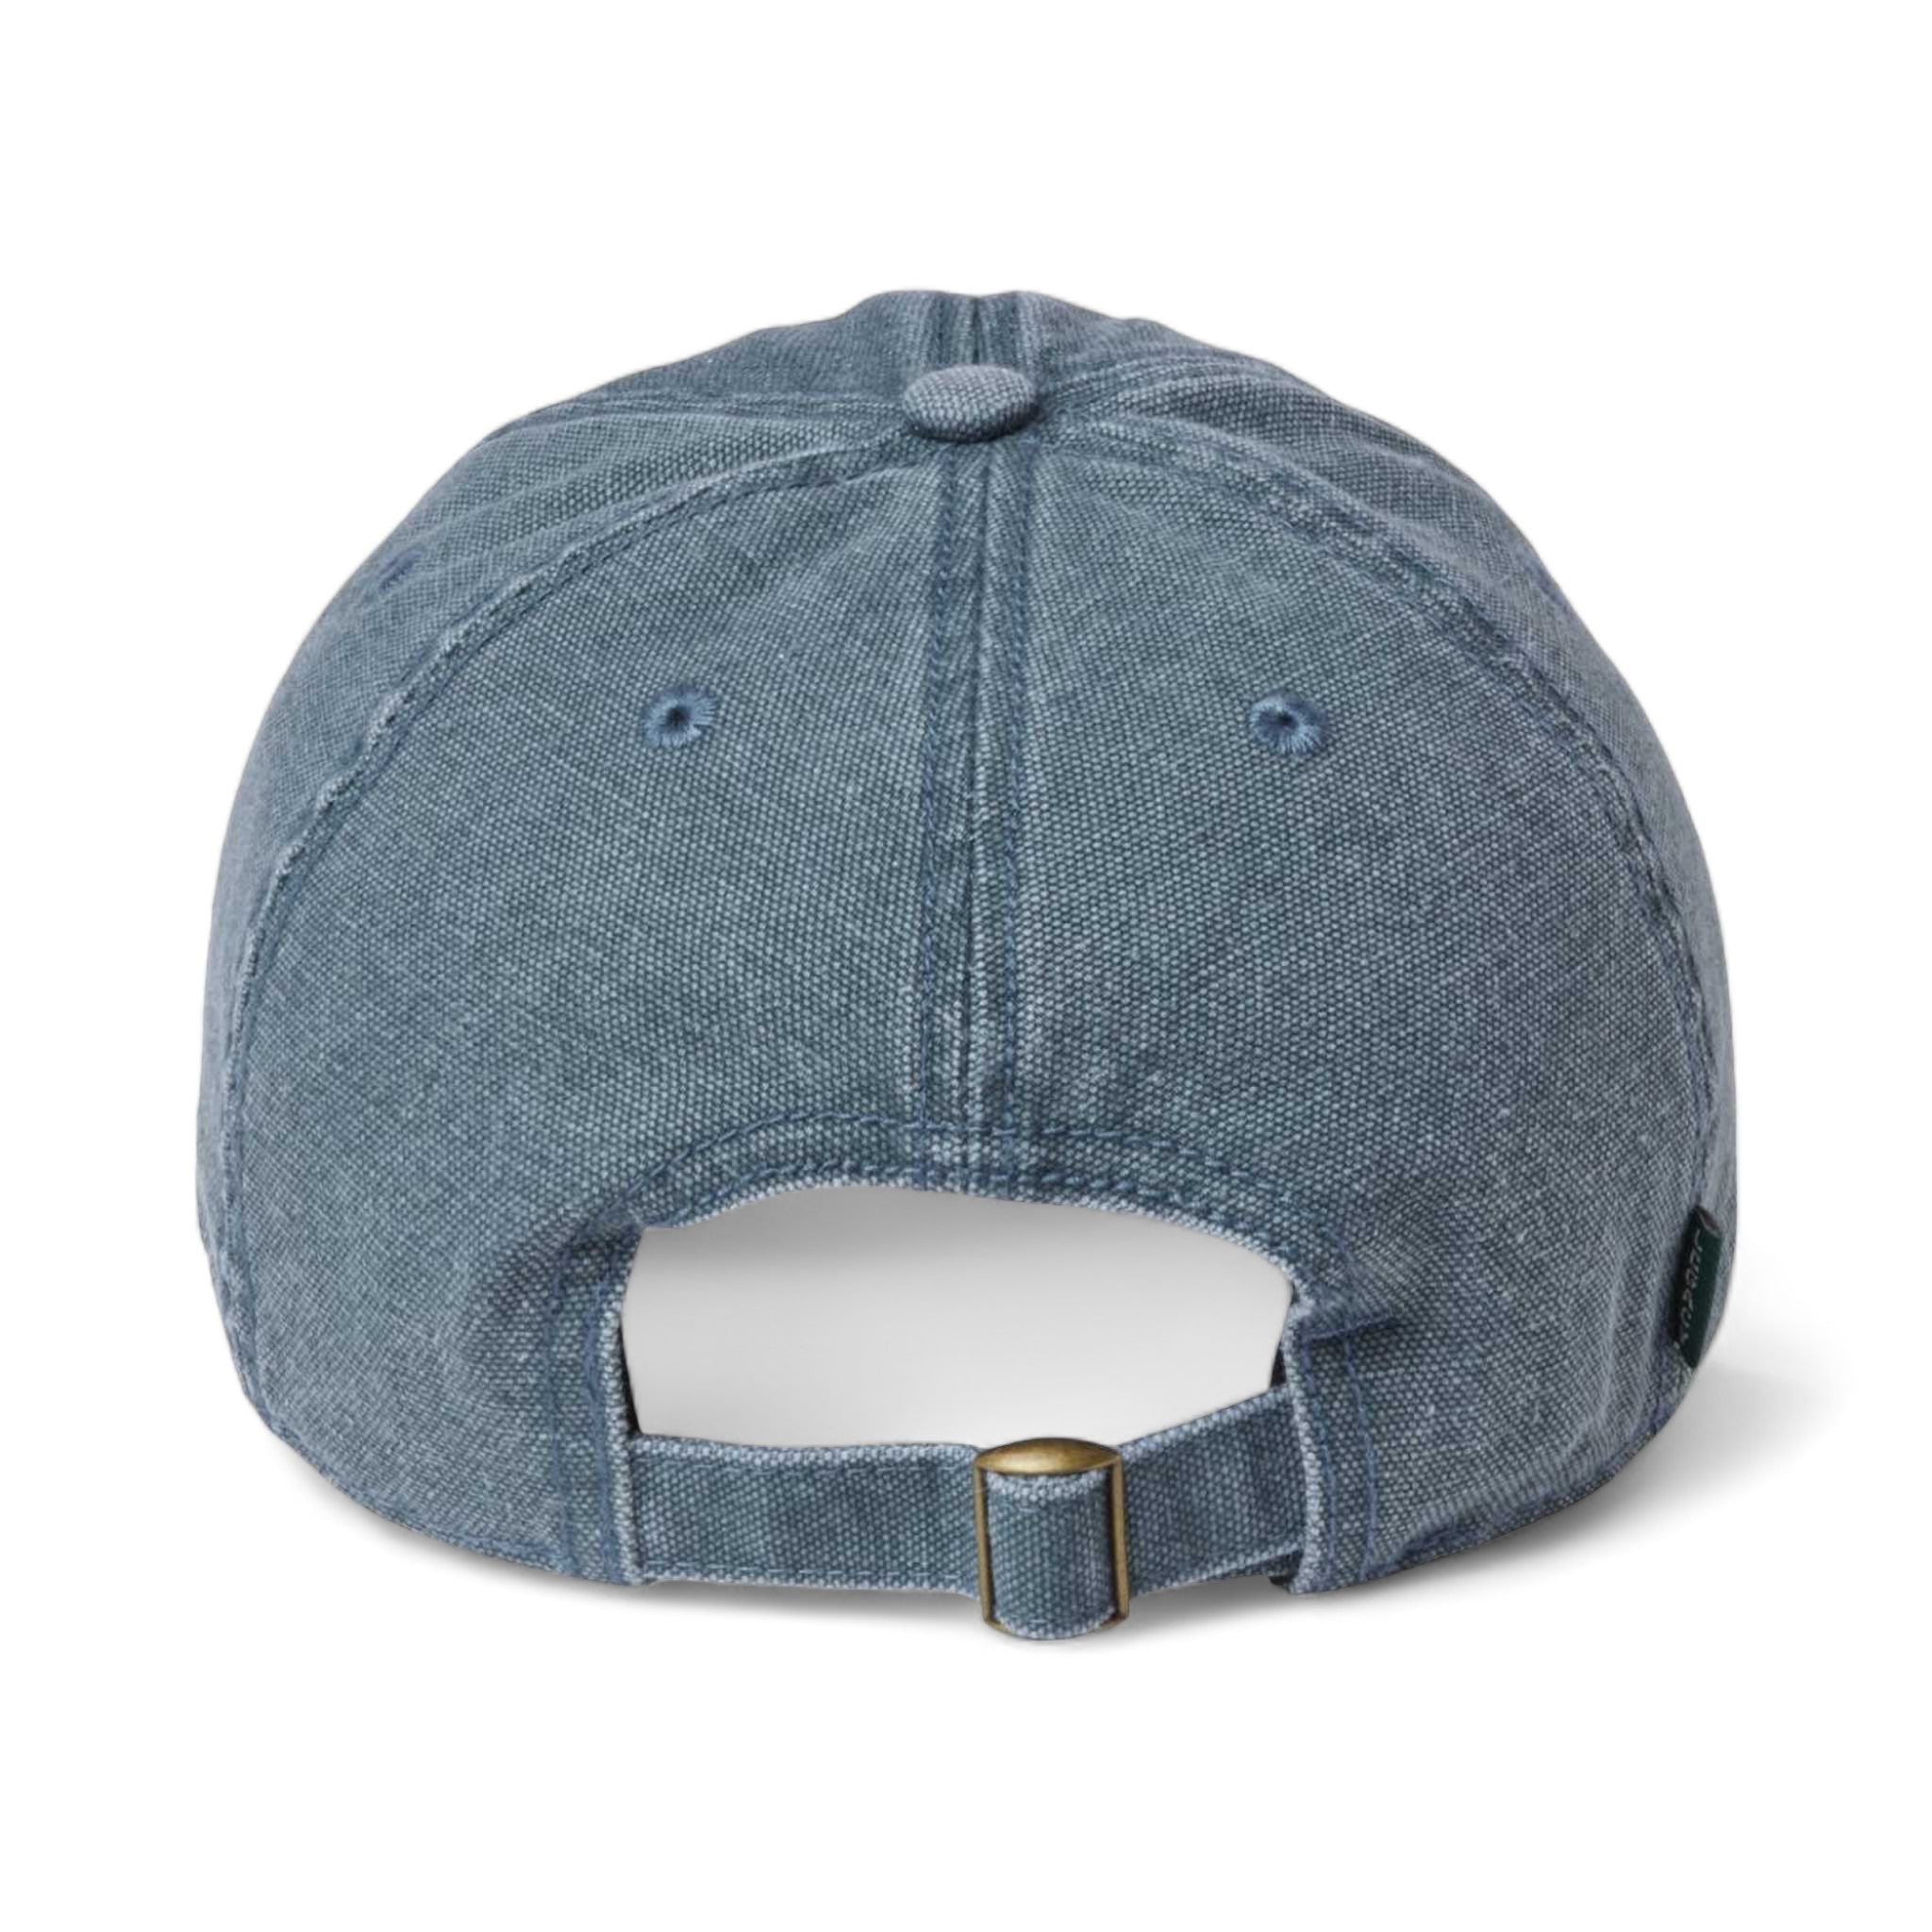 Back view of LEGACY DTAST custom hat in blue steel